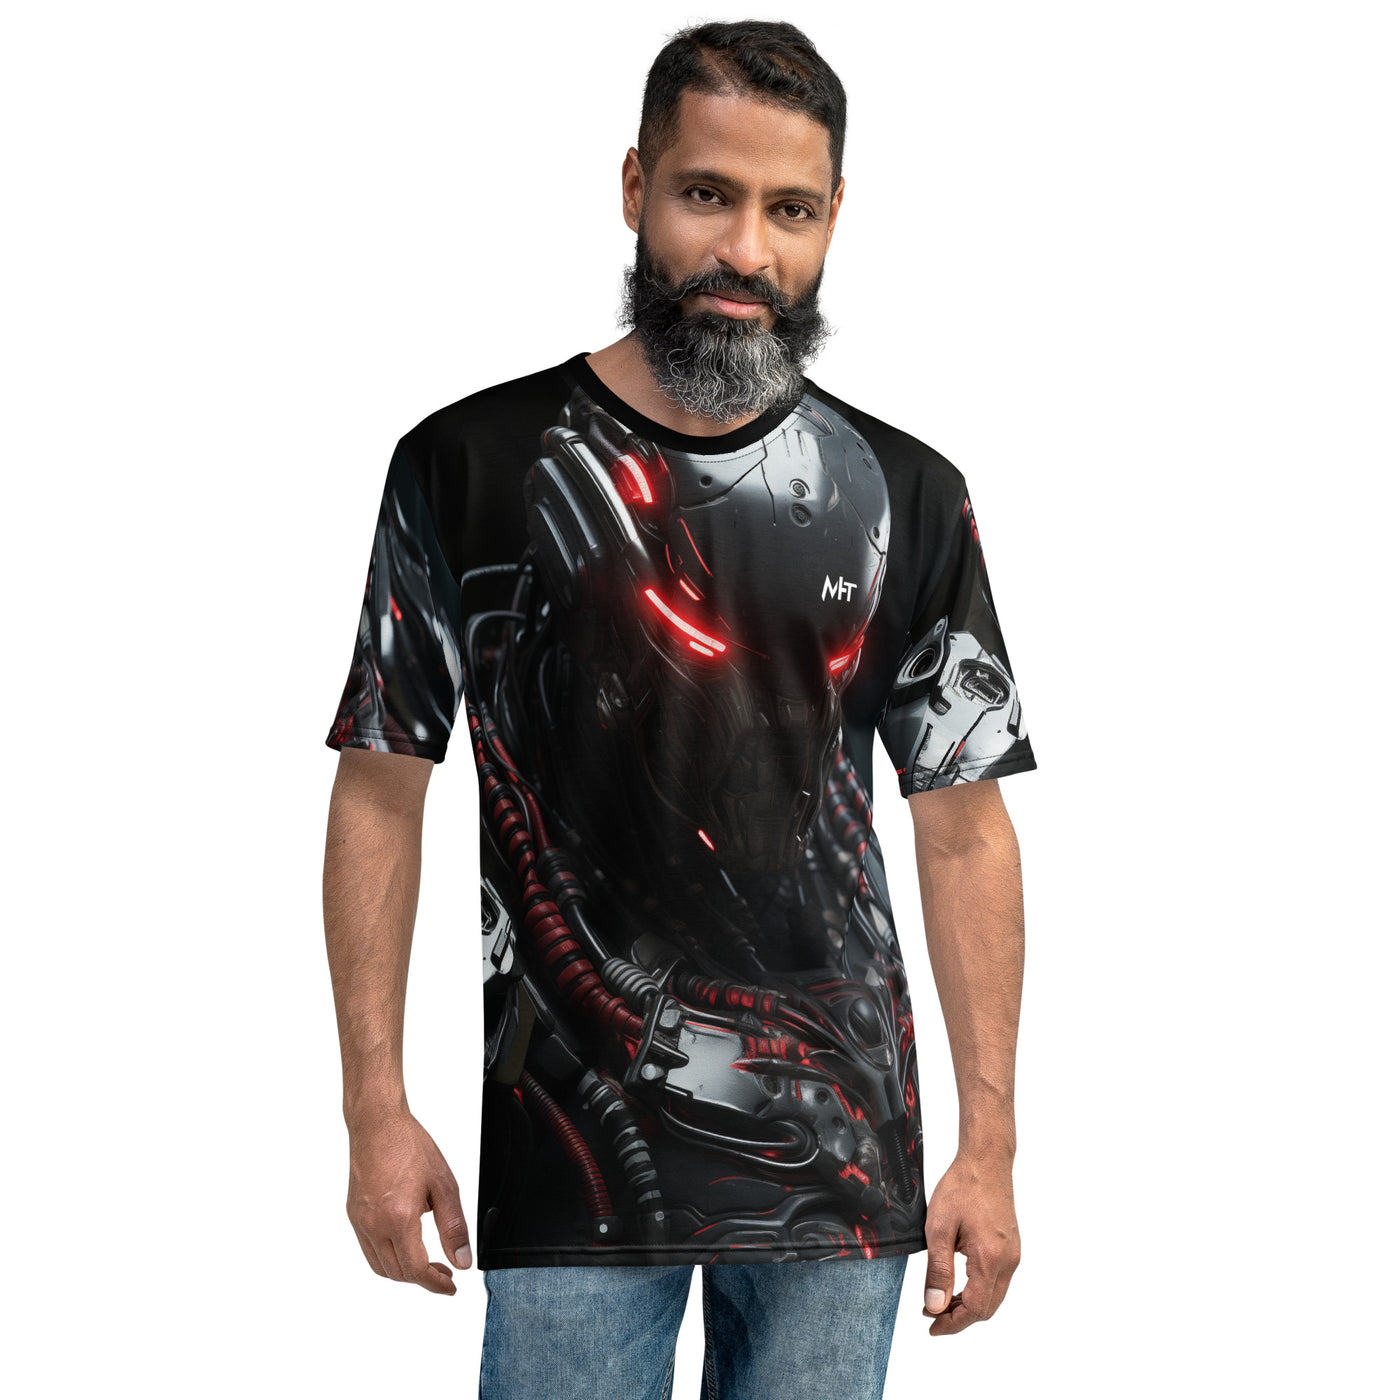 CyberArms Warrior - Men's t-shirt